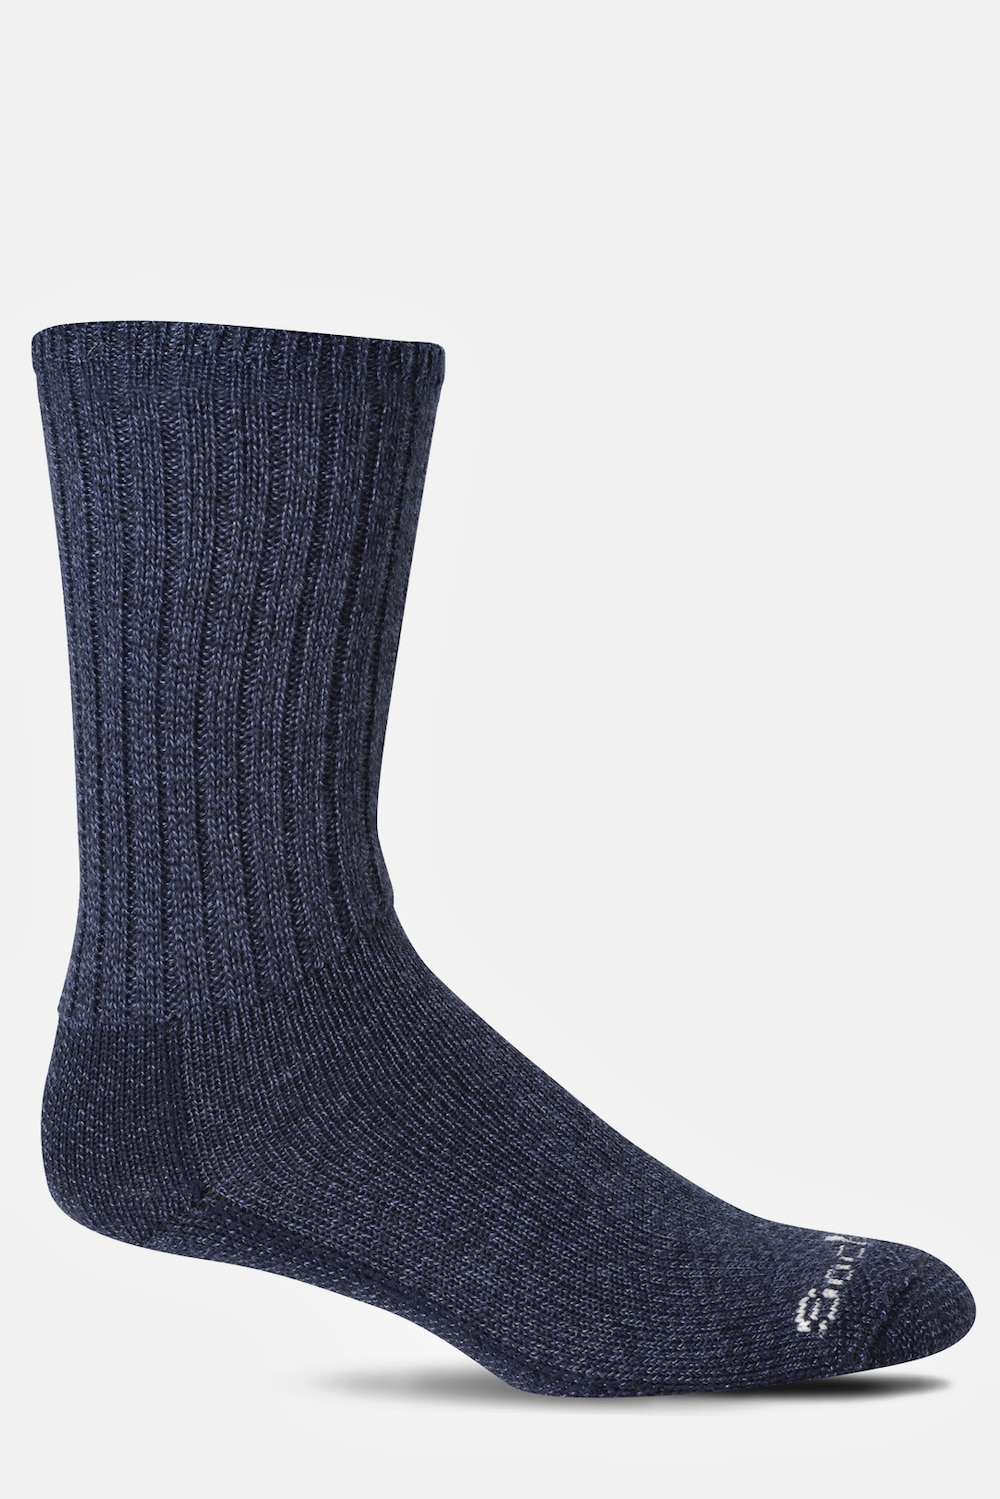 Plus Size Diabetics Socks, Man, blue, size: 6-8, viscose/wool/synthetic fibers, JP1880